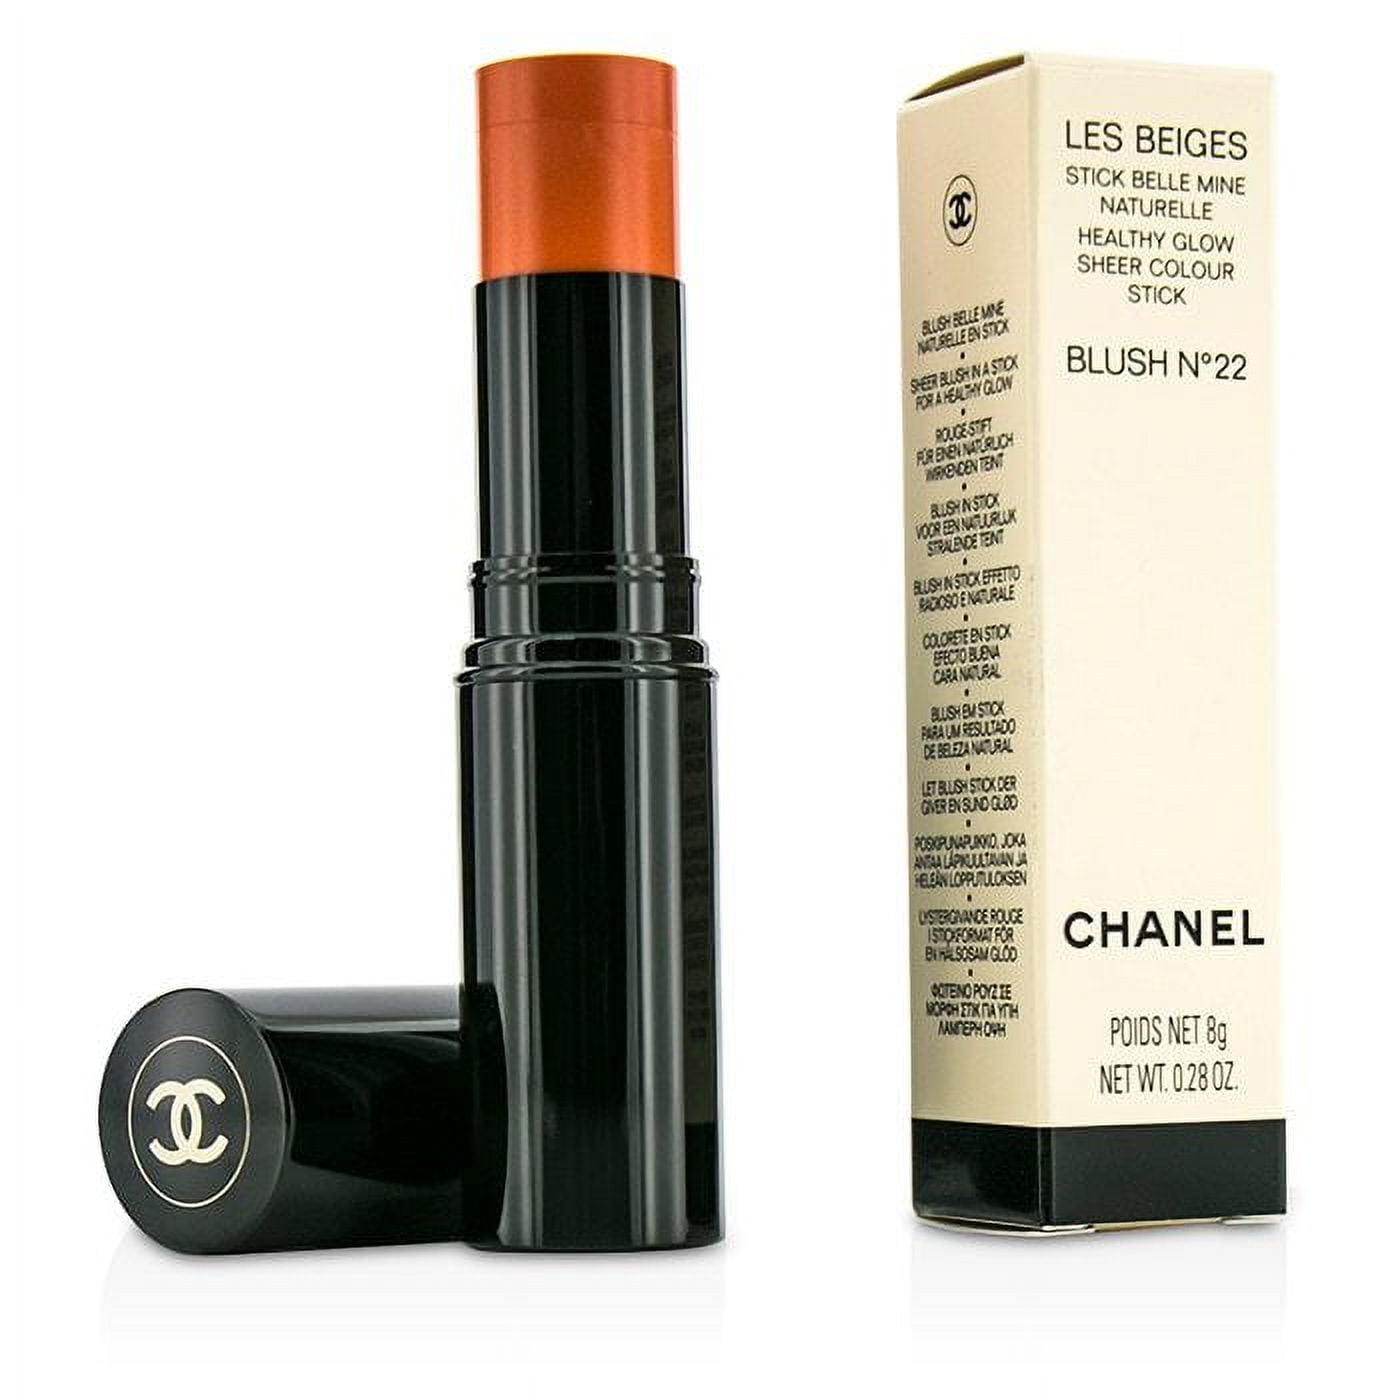 Chanel Les Beiges Healthy Glow Sheer Colour Stick 20